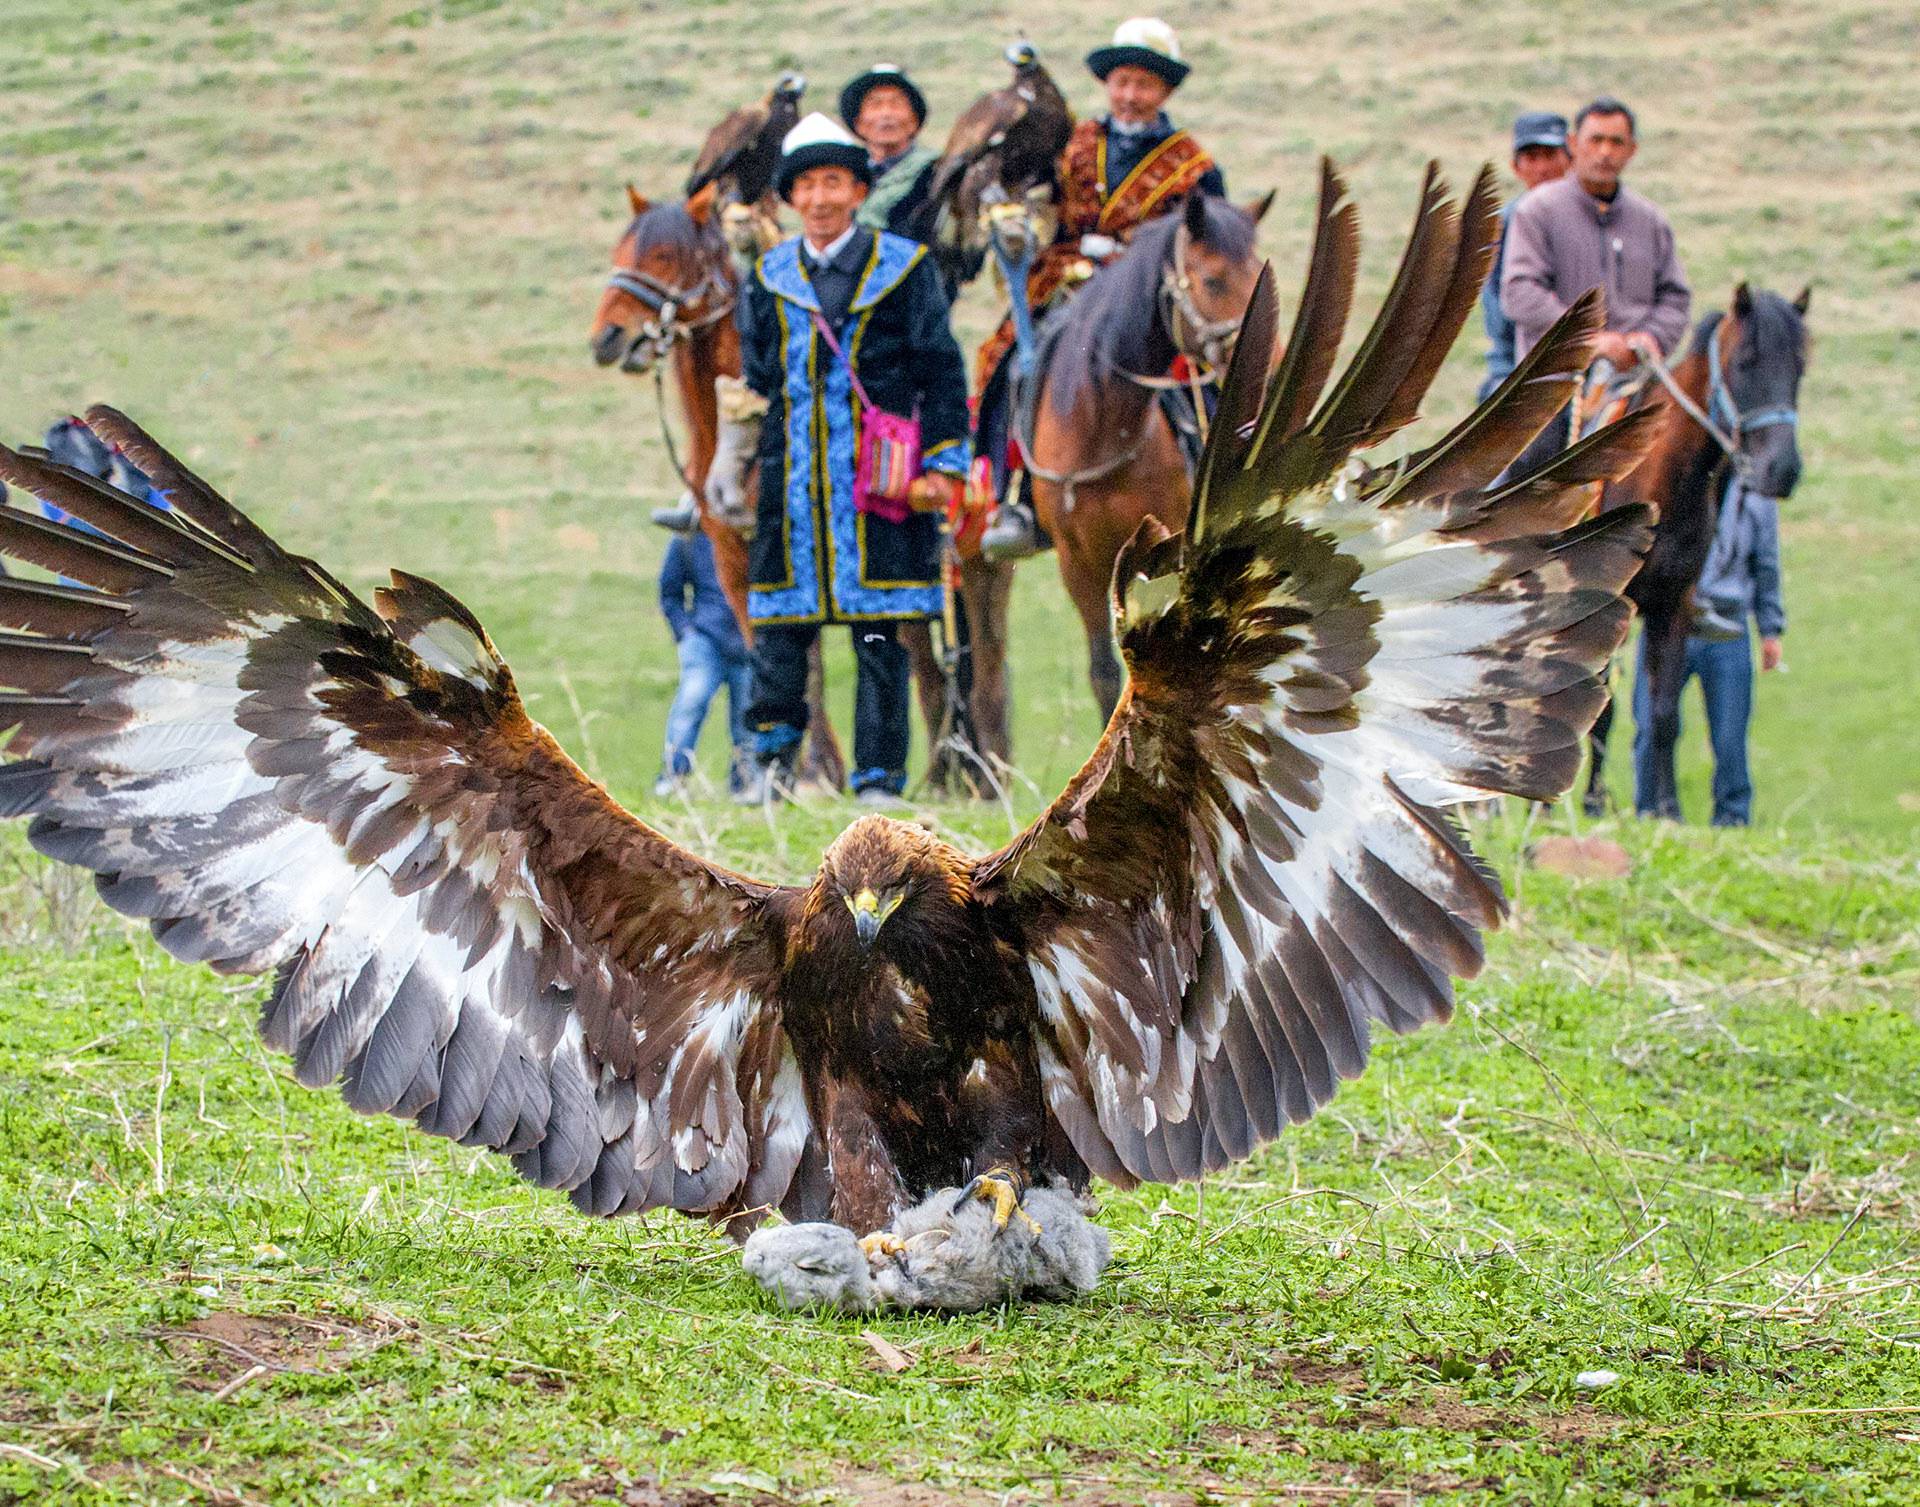 Kazakh herdsmen watch a hawk hunt a rabbit during a local festival in Yining county